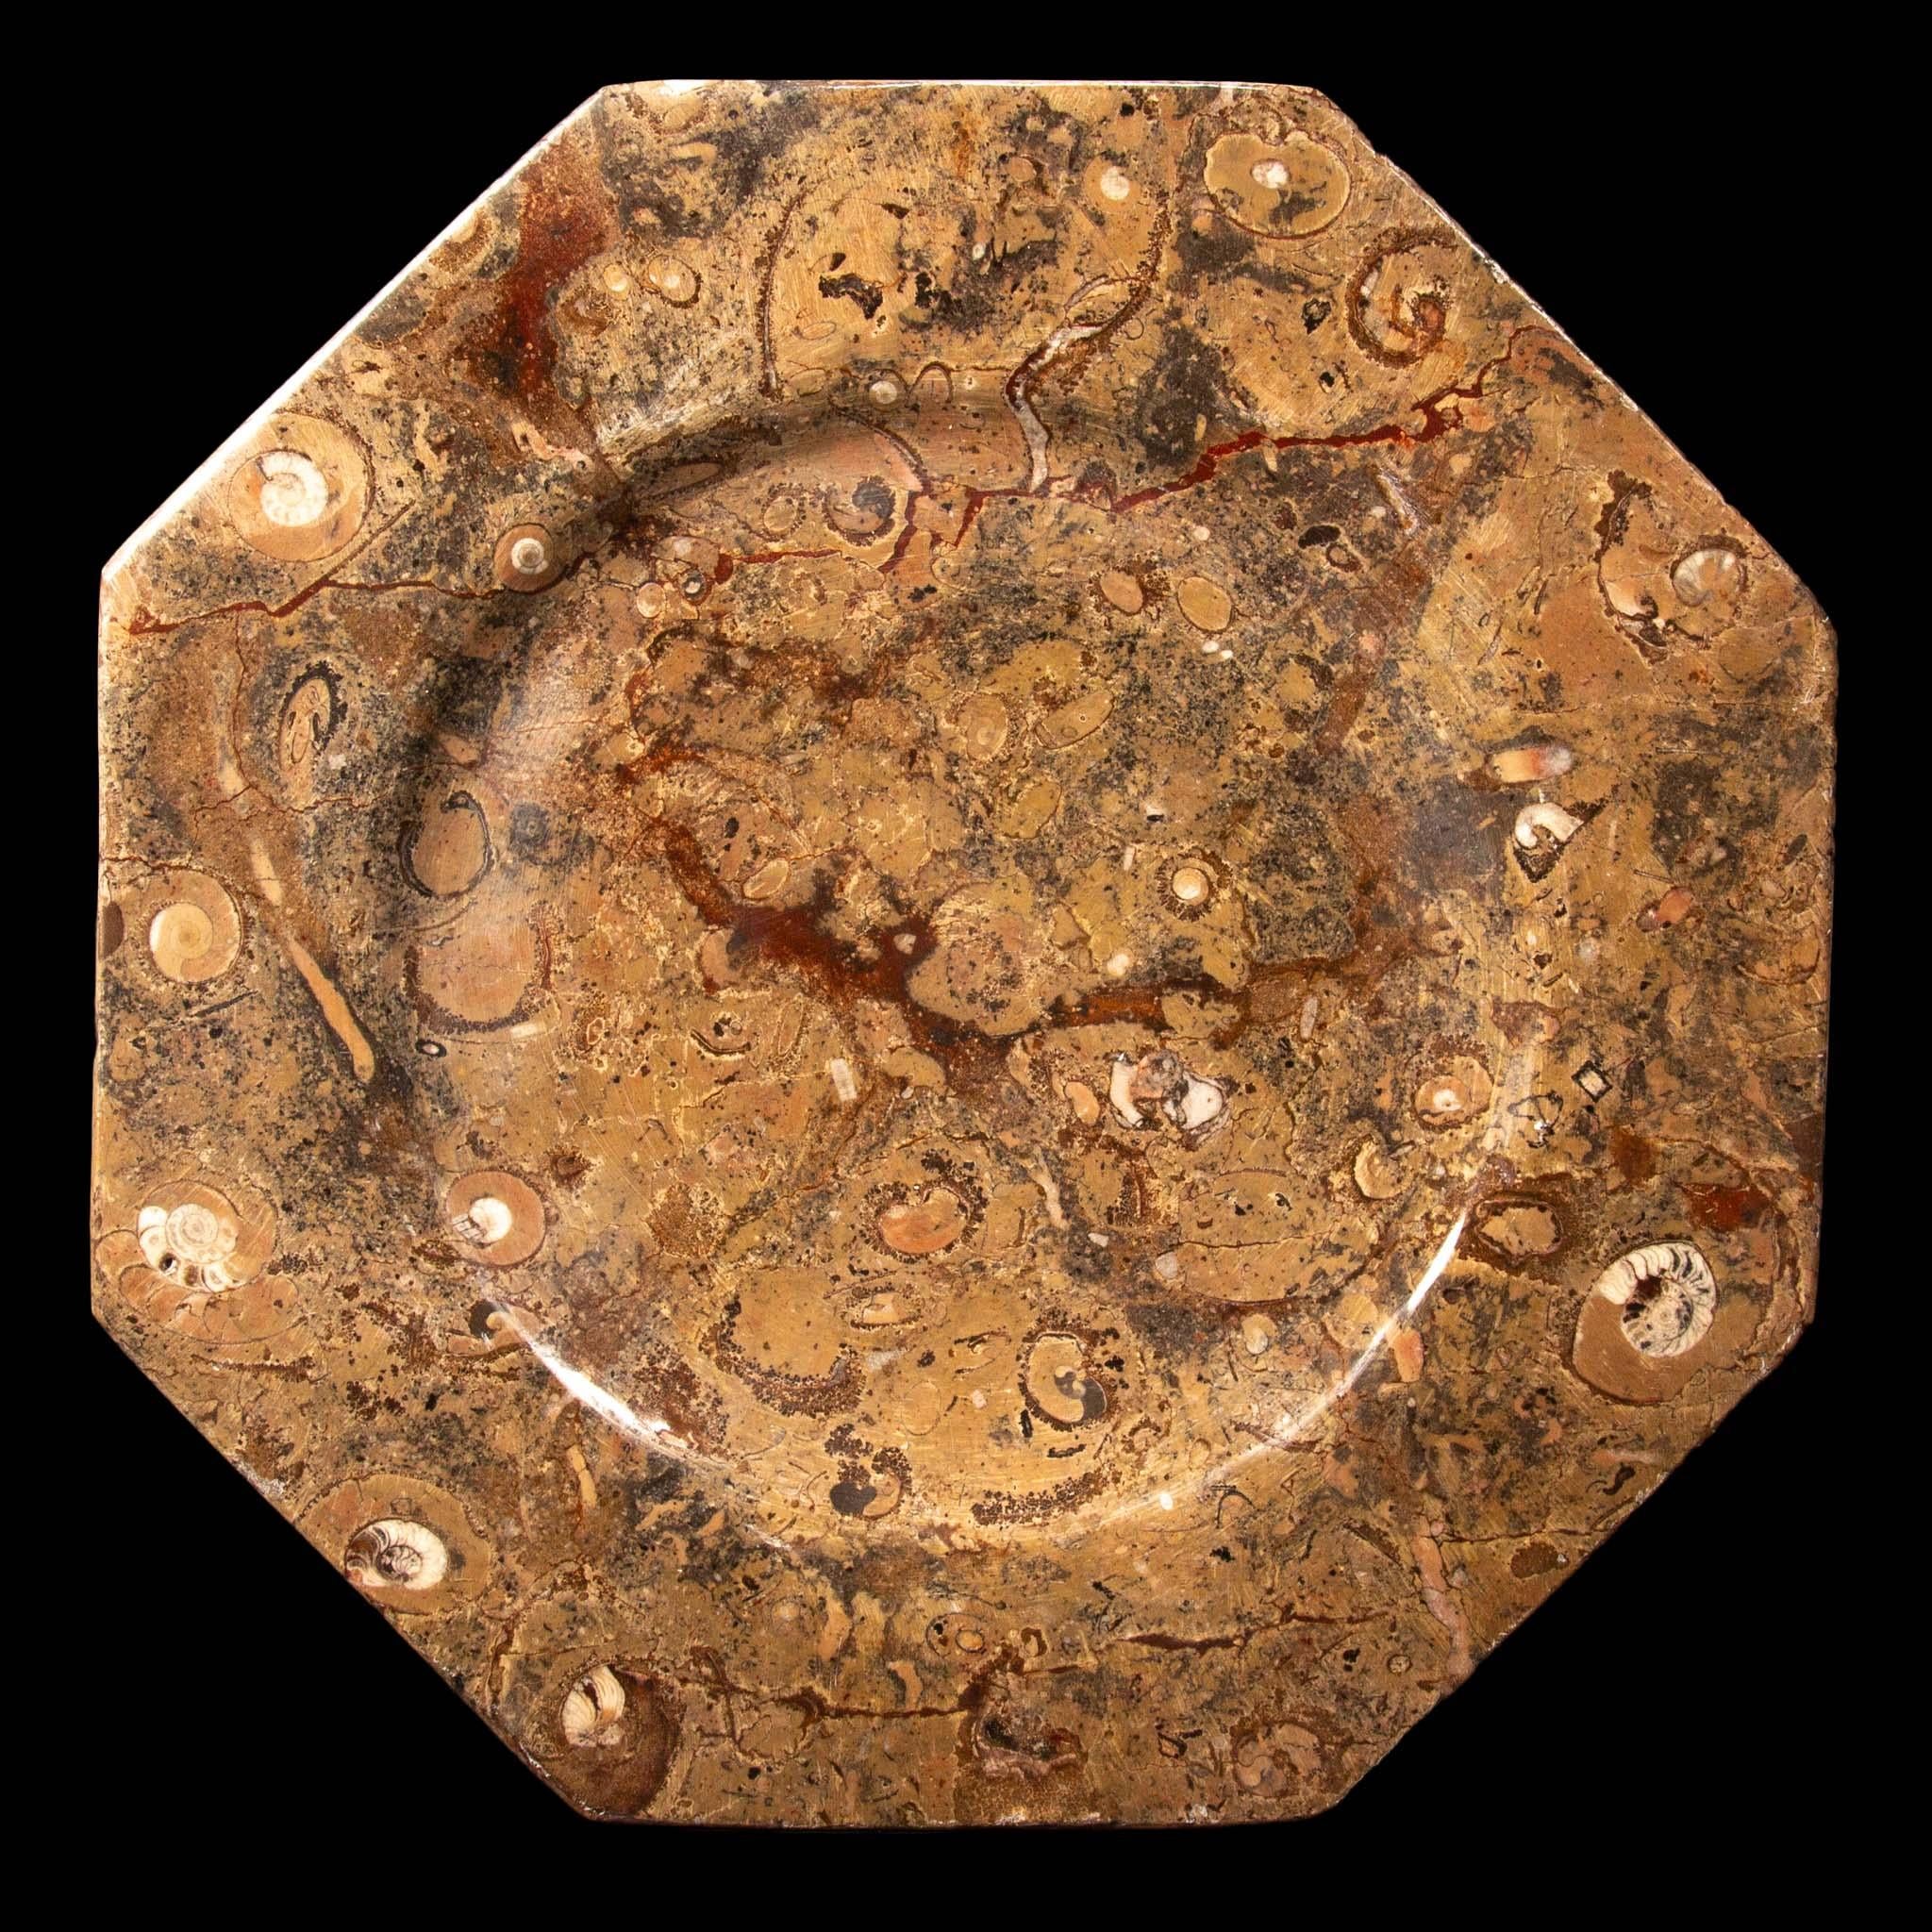 Set of 6 Orthoceras/Fossil Stone plates, 12.5